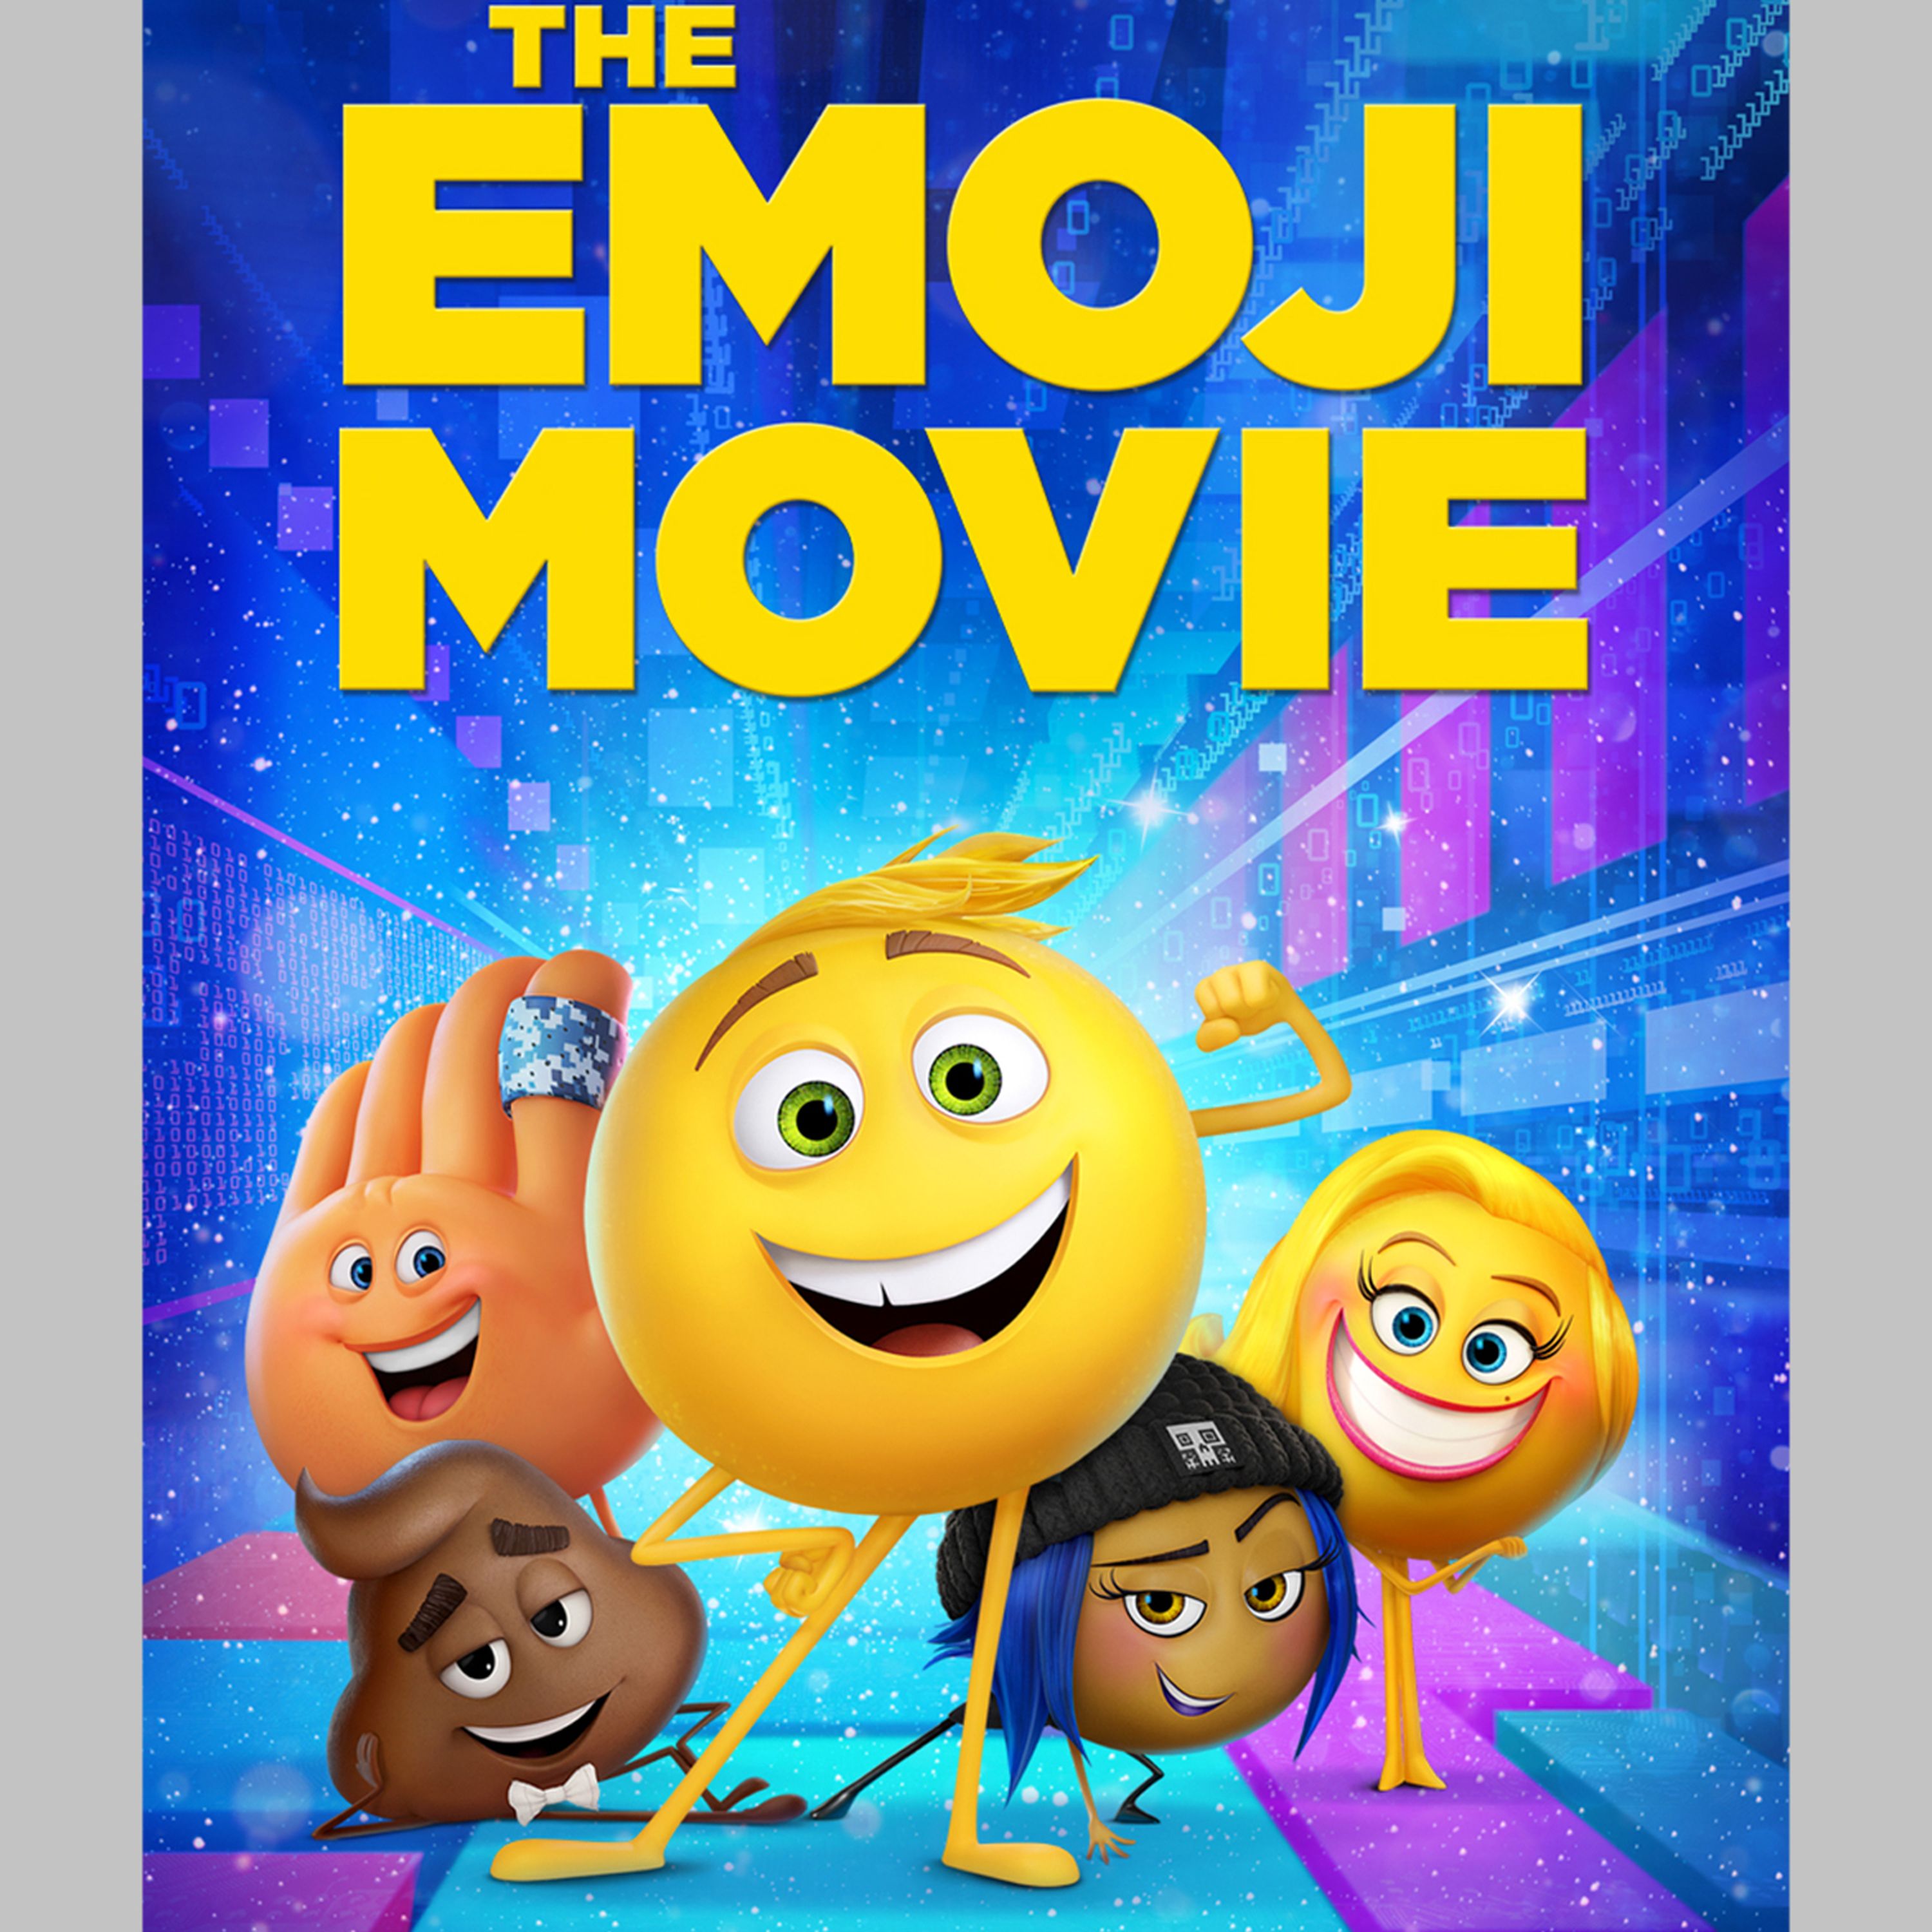 REVIEW: The Emoji Movie